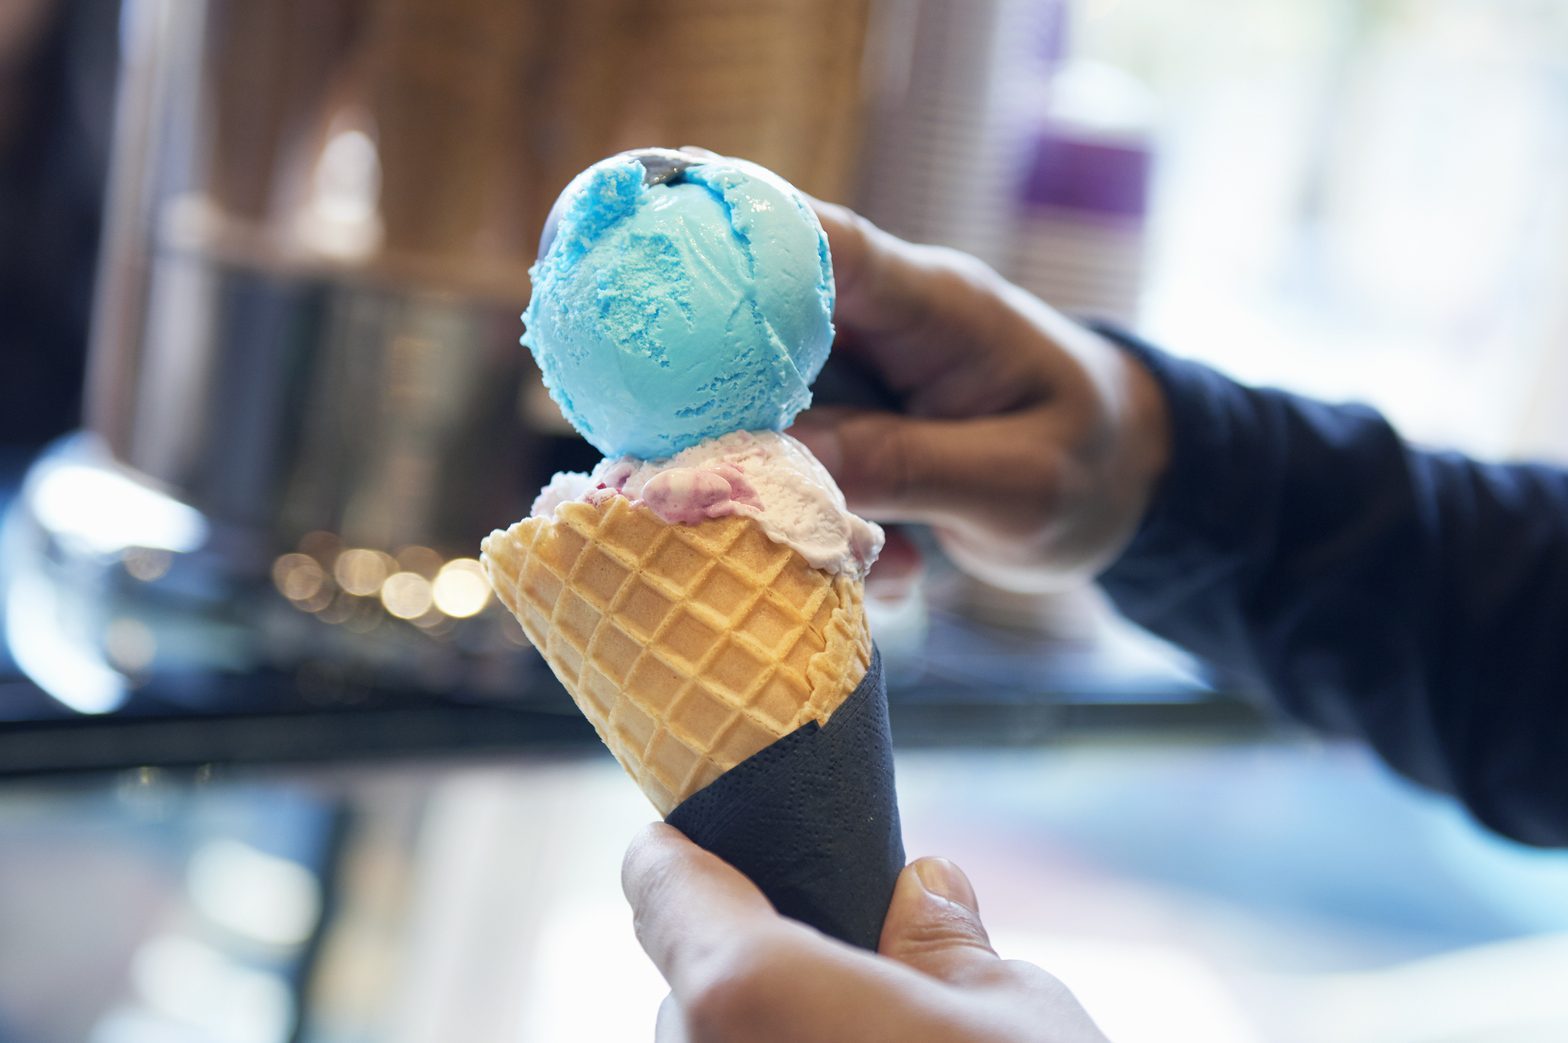 blue ice cream flavors